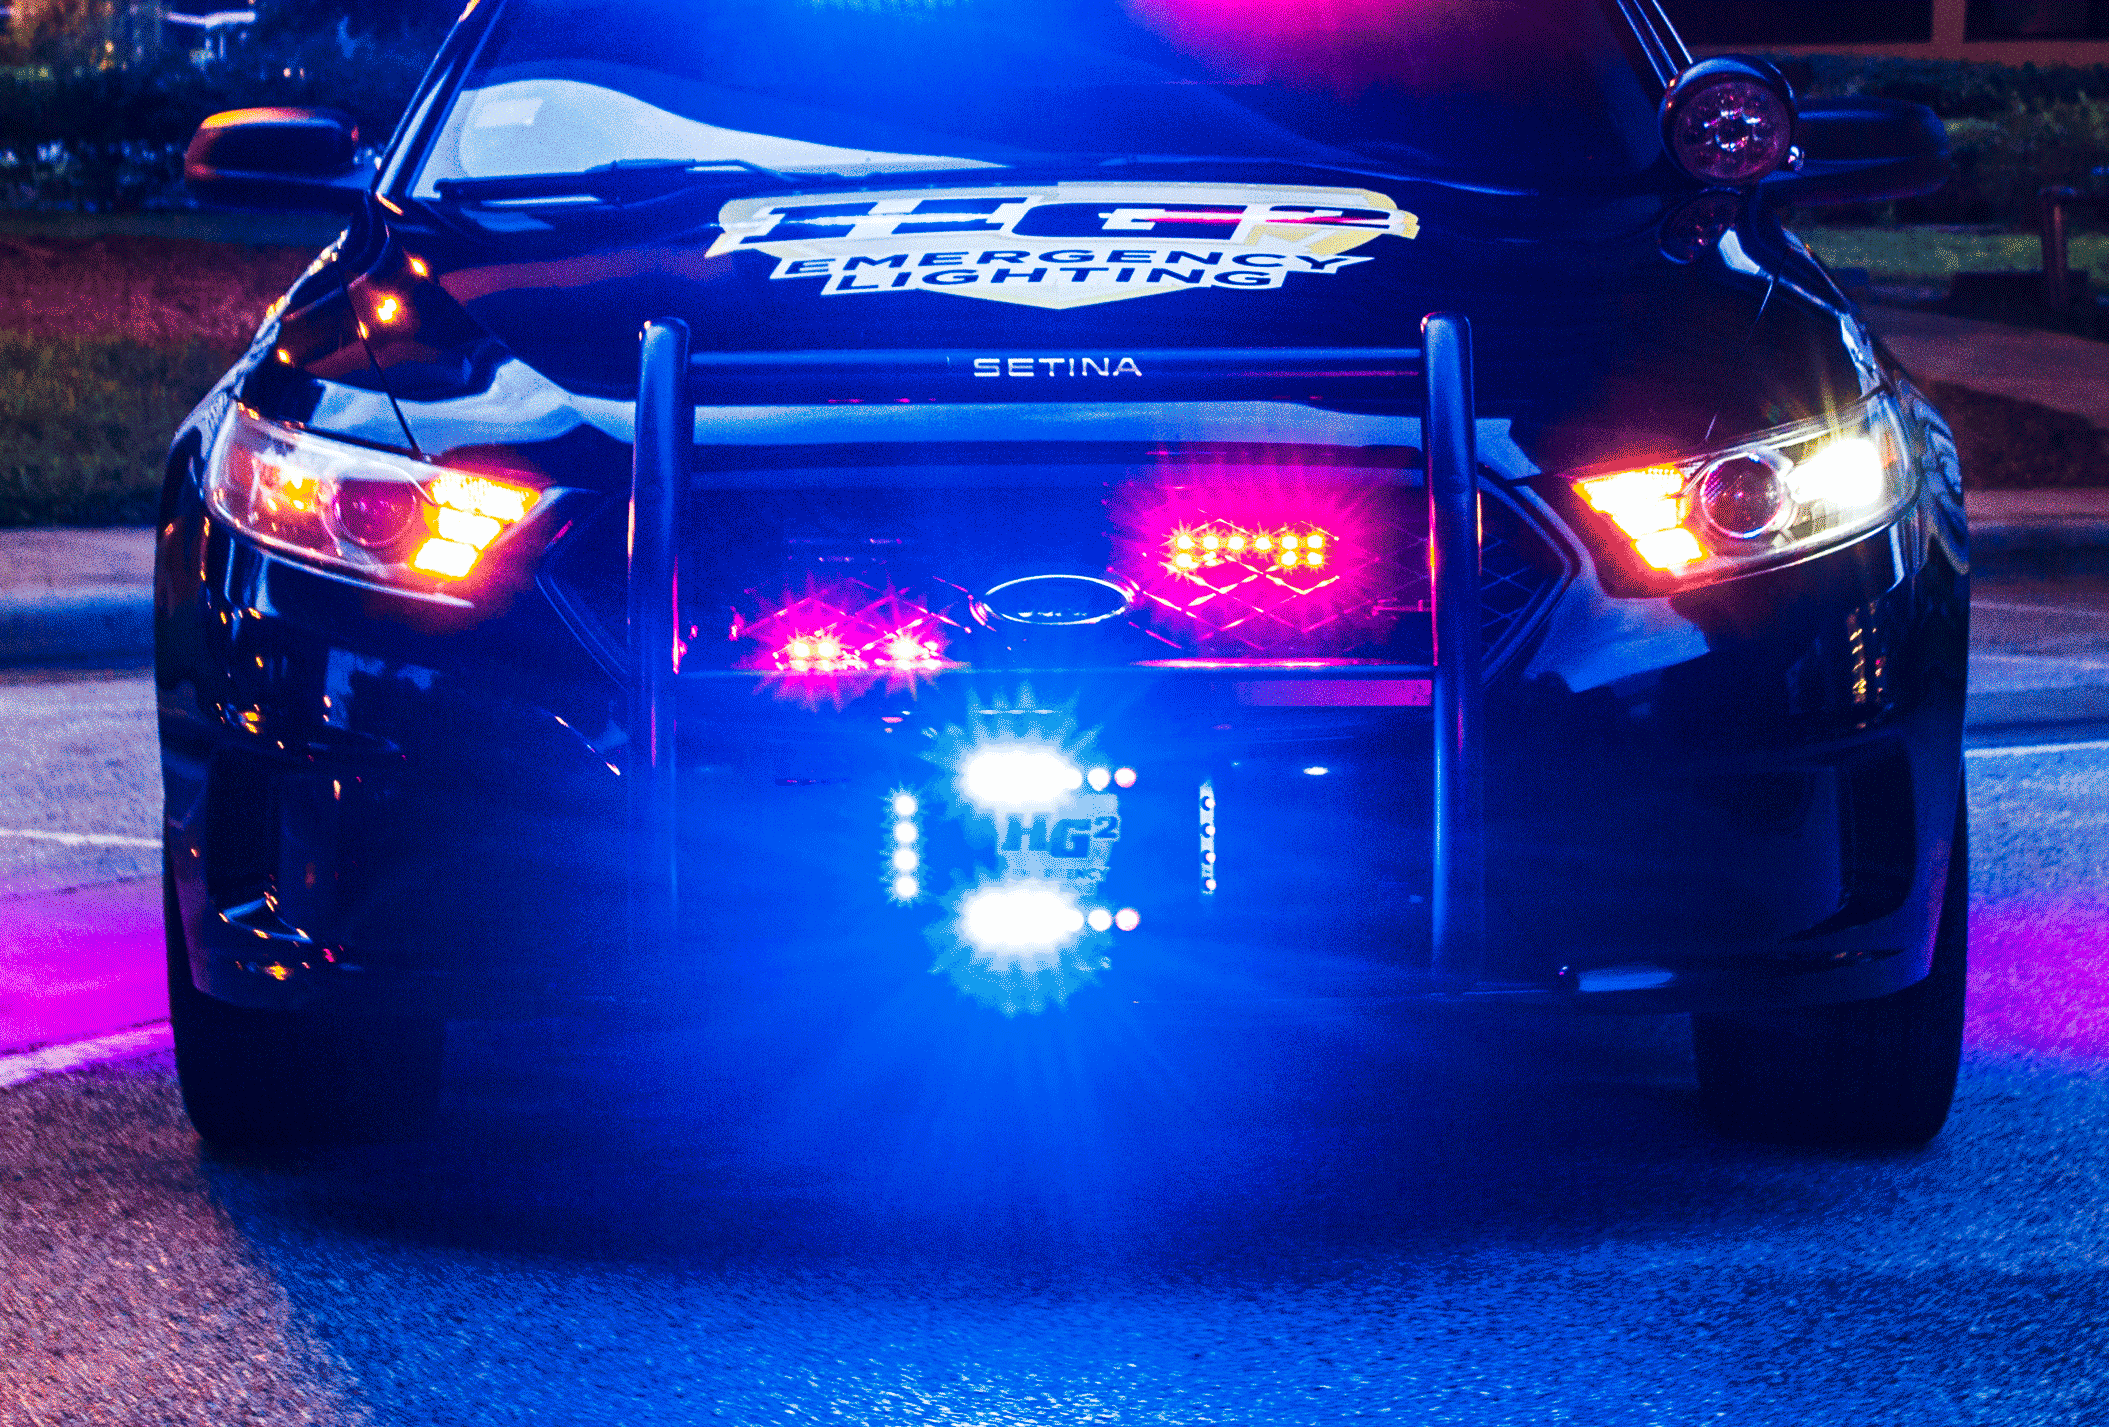 tag light â€“ vehicle lighting â€“ police lights â€“ HG2 Emergency Lighting